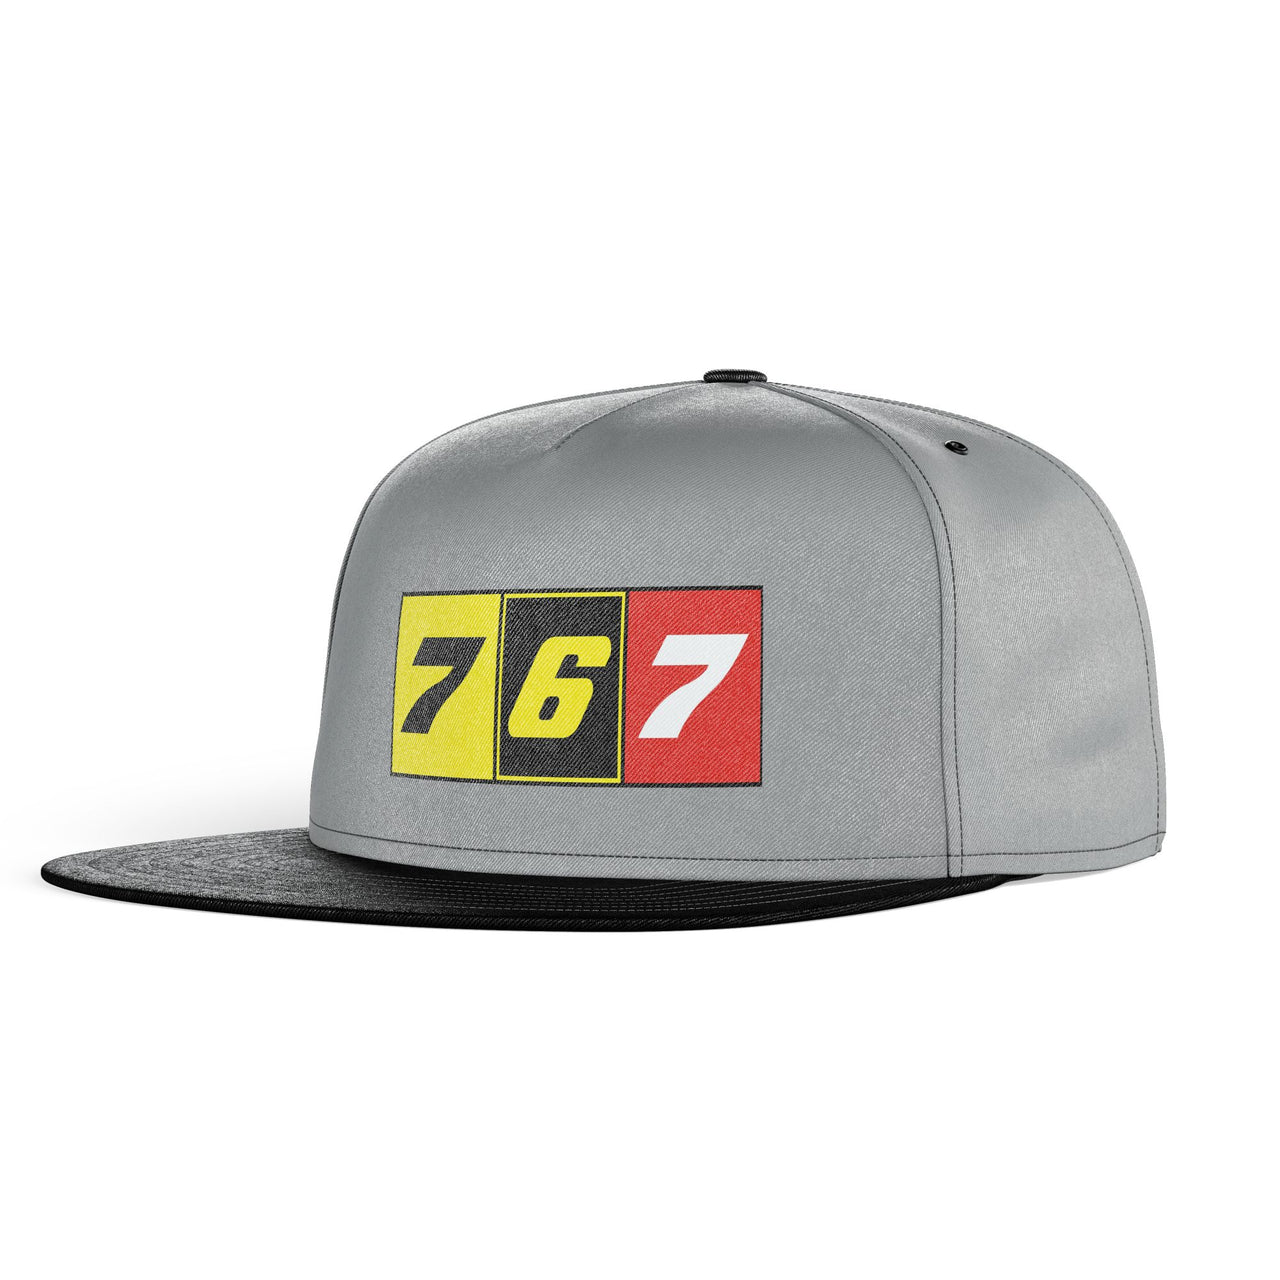 Flat Colourful 767 Designed Snapback Caps & Hats